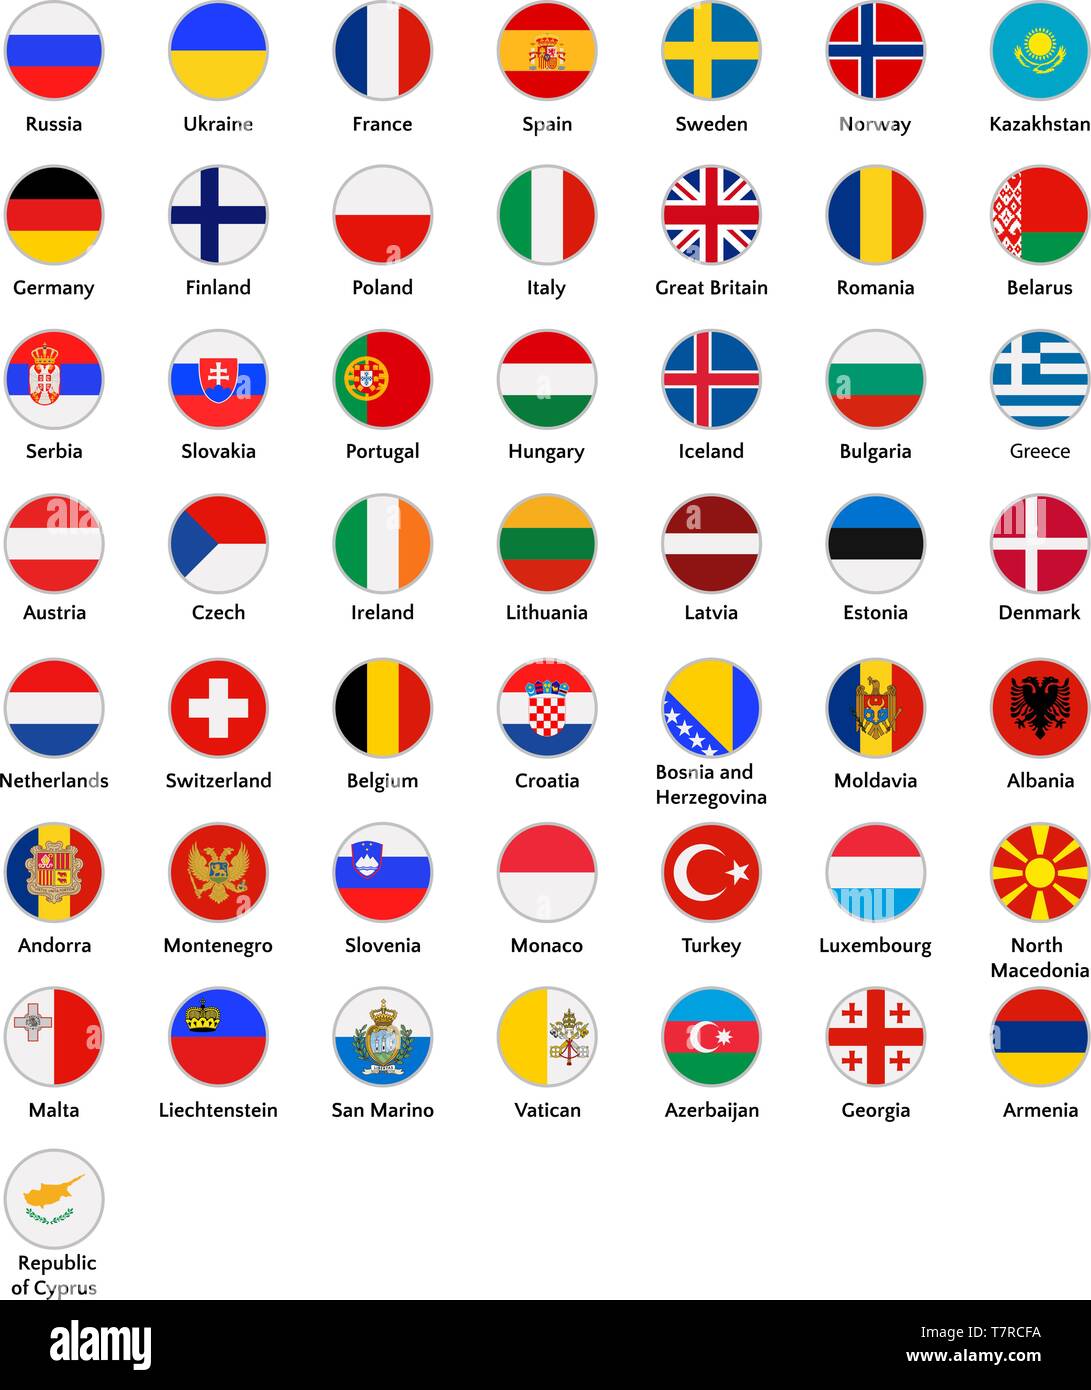 European countries icon set, flags of Great Britain, Malta, Liechtenstein, etc. Symbols in flat style Stock Vector